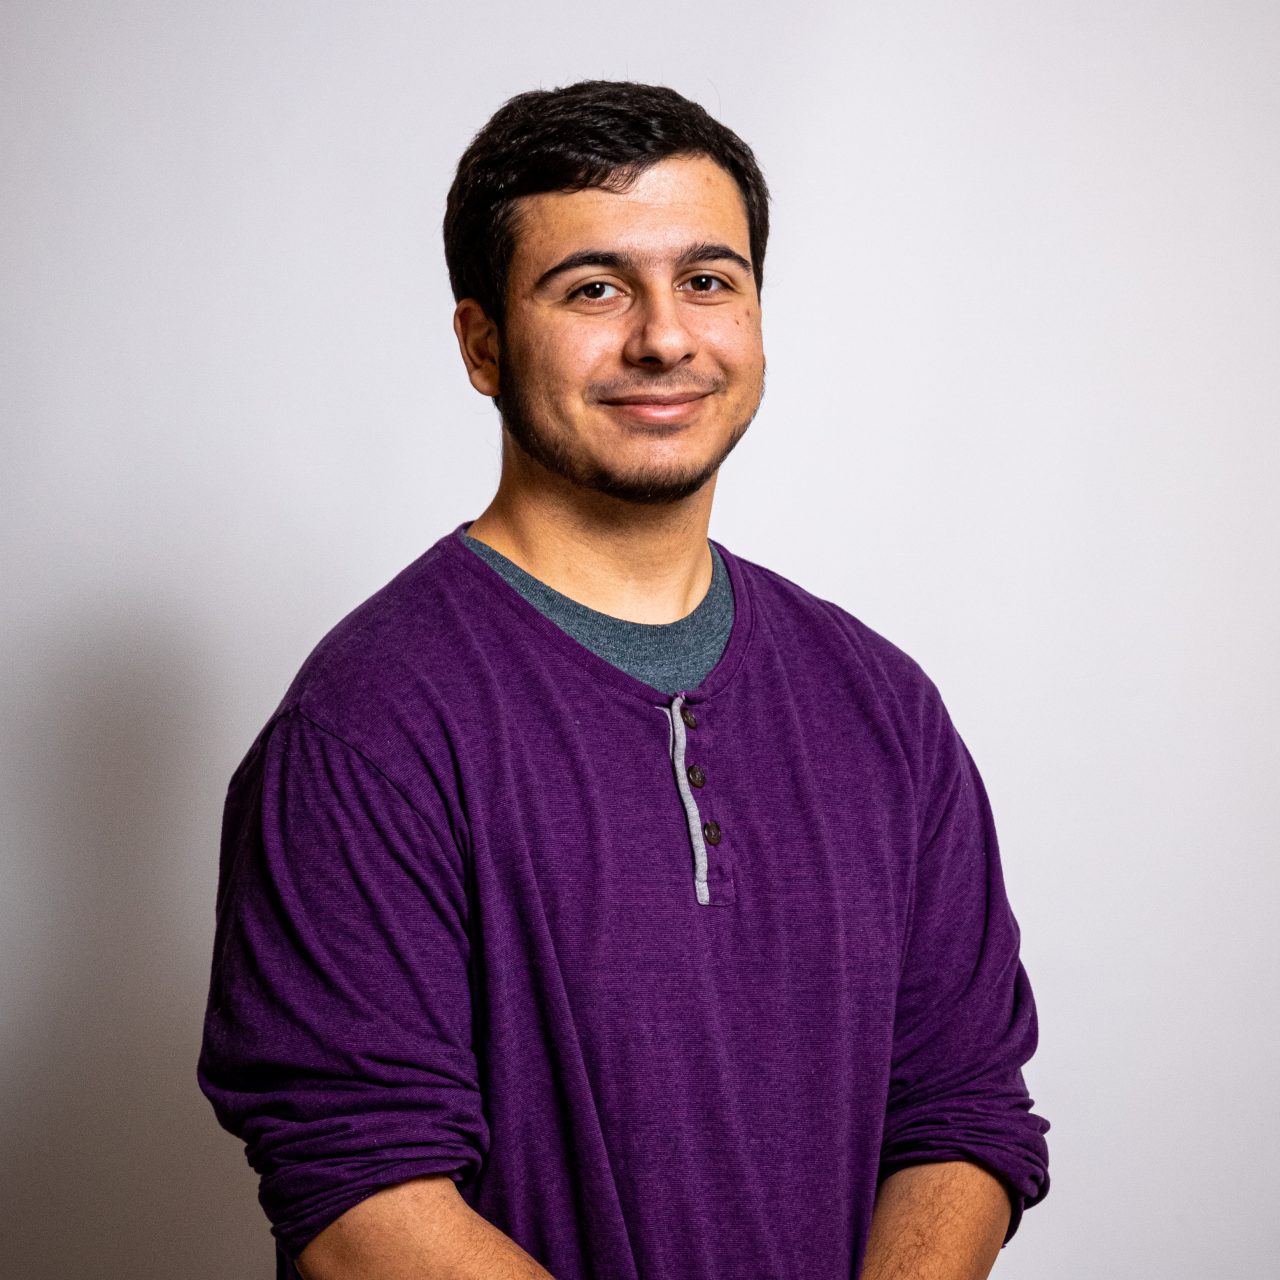 Profile picture of student Mark Botaish